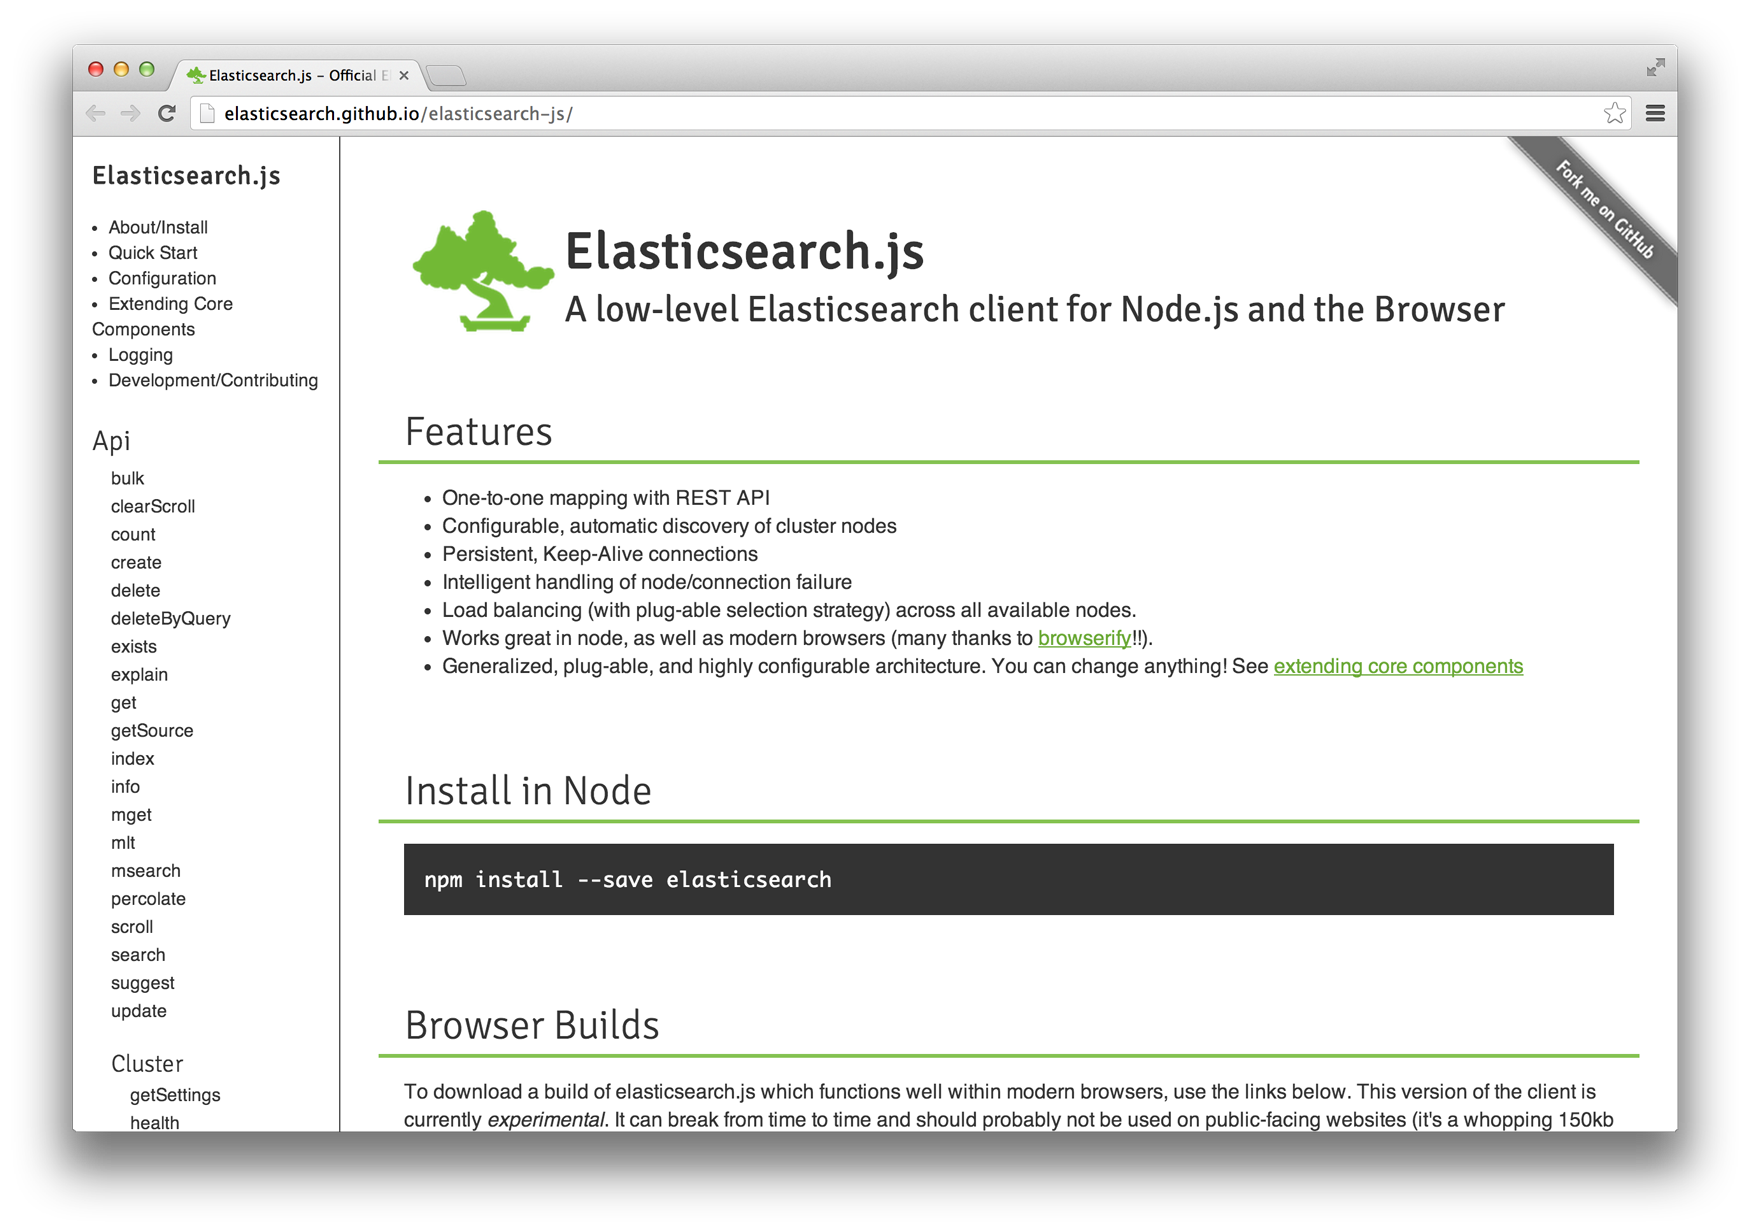 The Elasticsearch.js documentation site